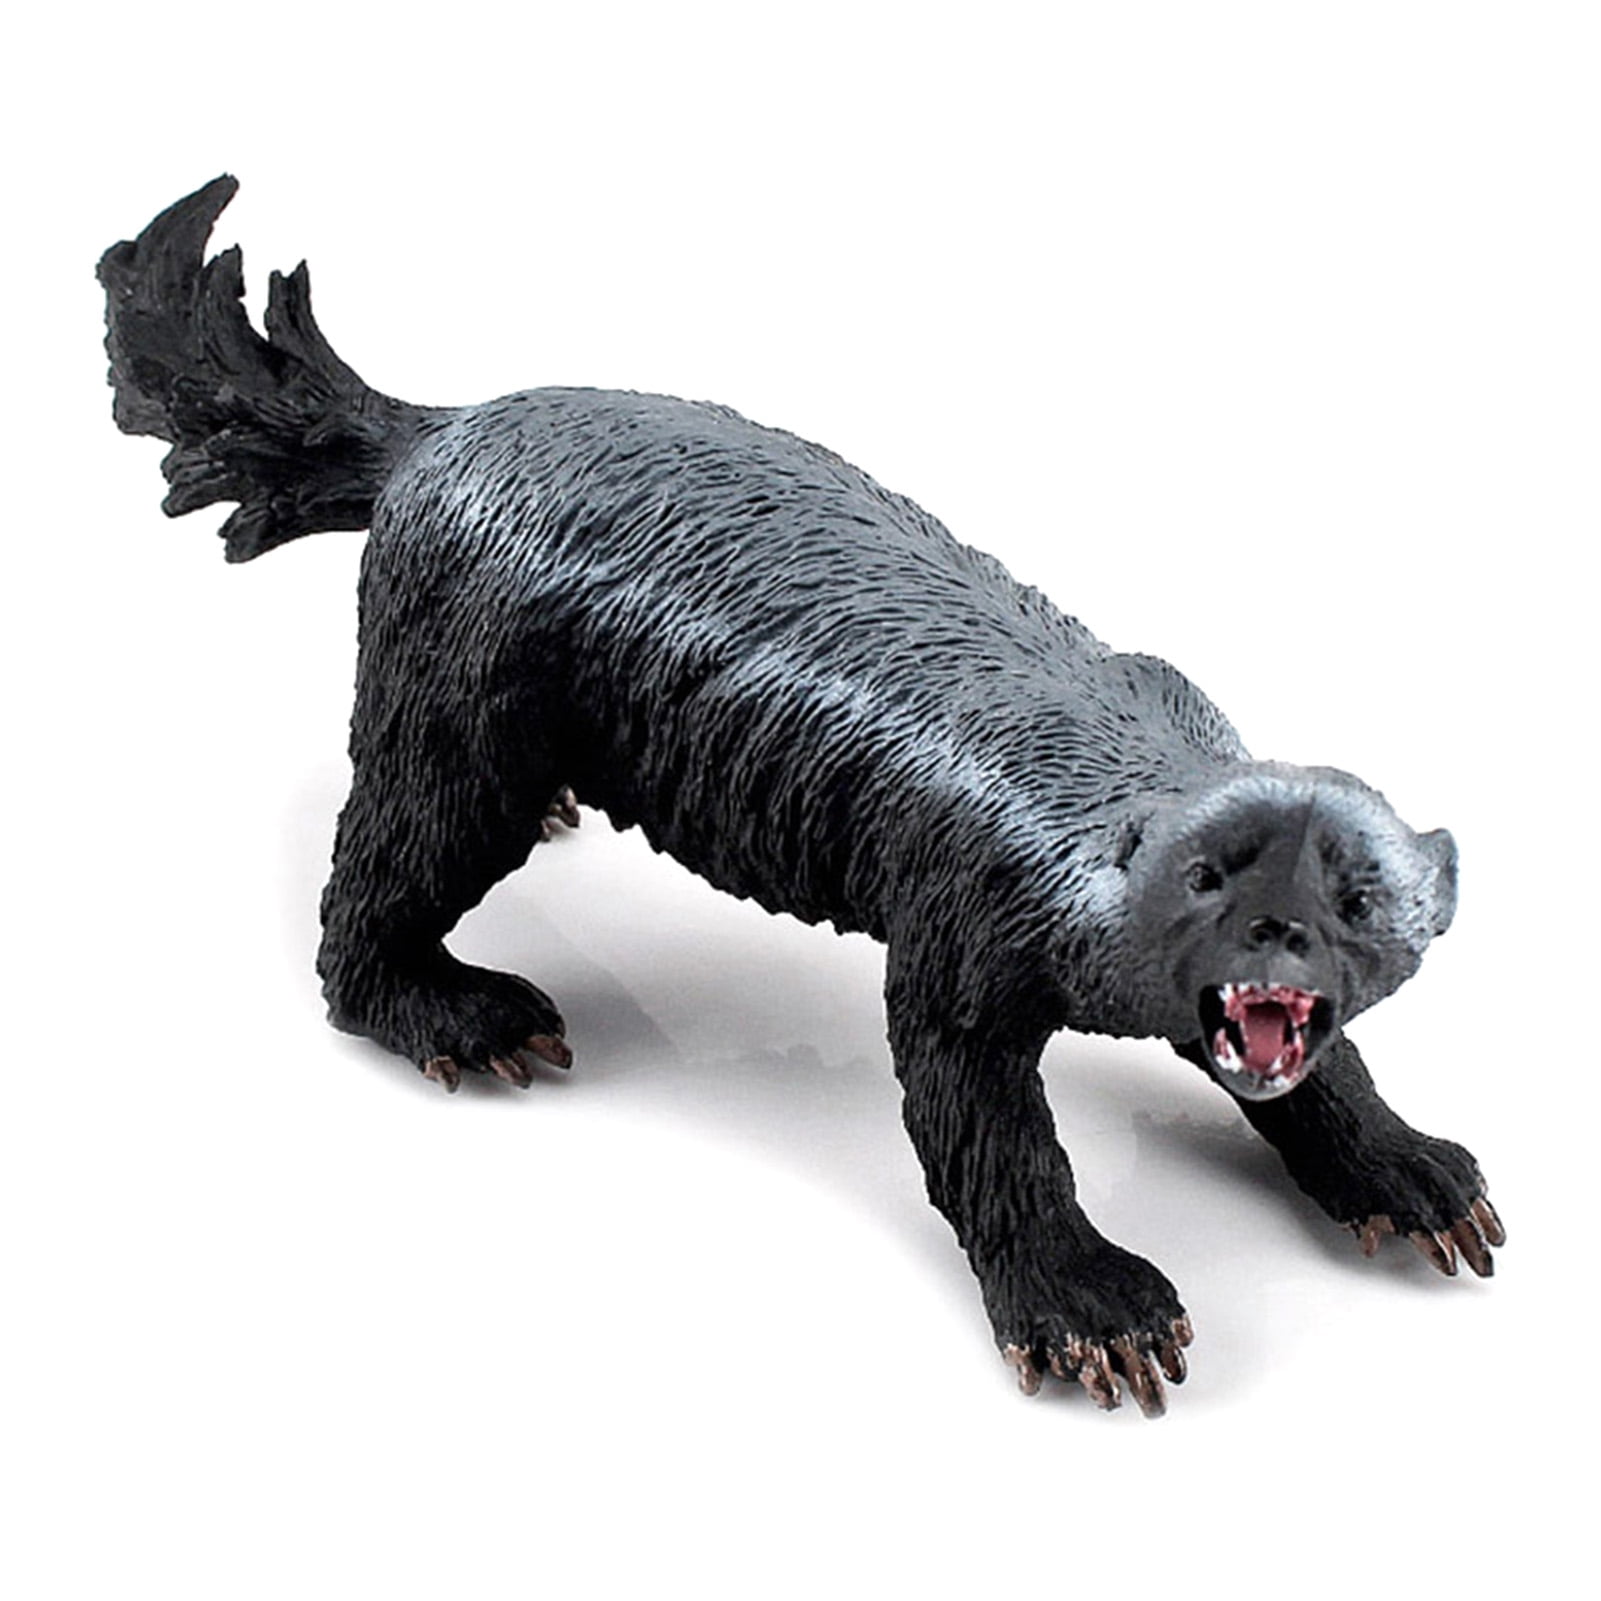 Lfelike Badger Model Wildlife Figure Educational Animal Toy for Child Kids Gift 